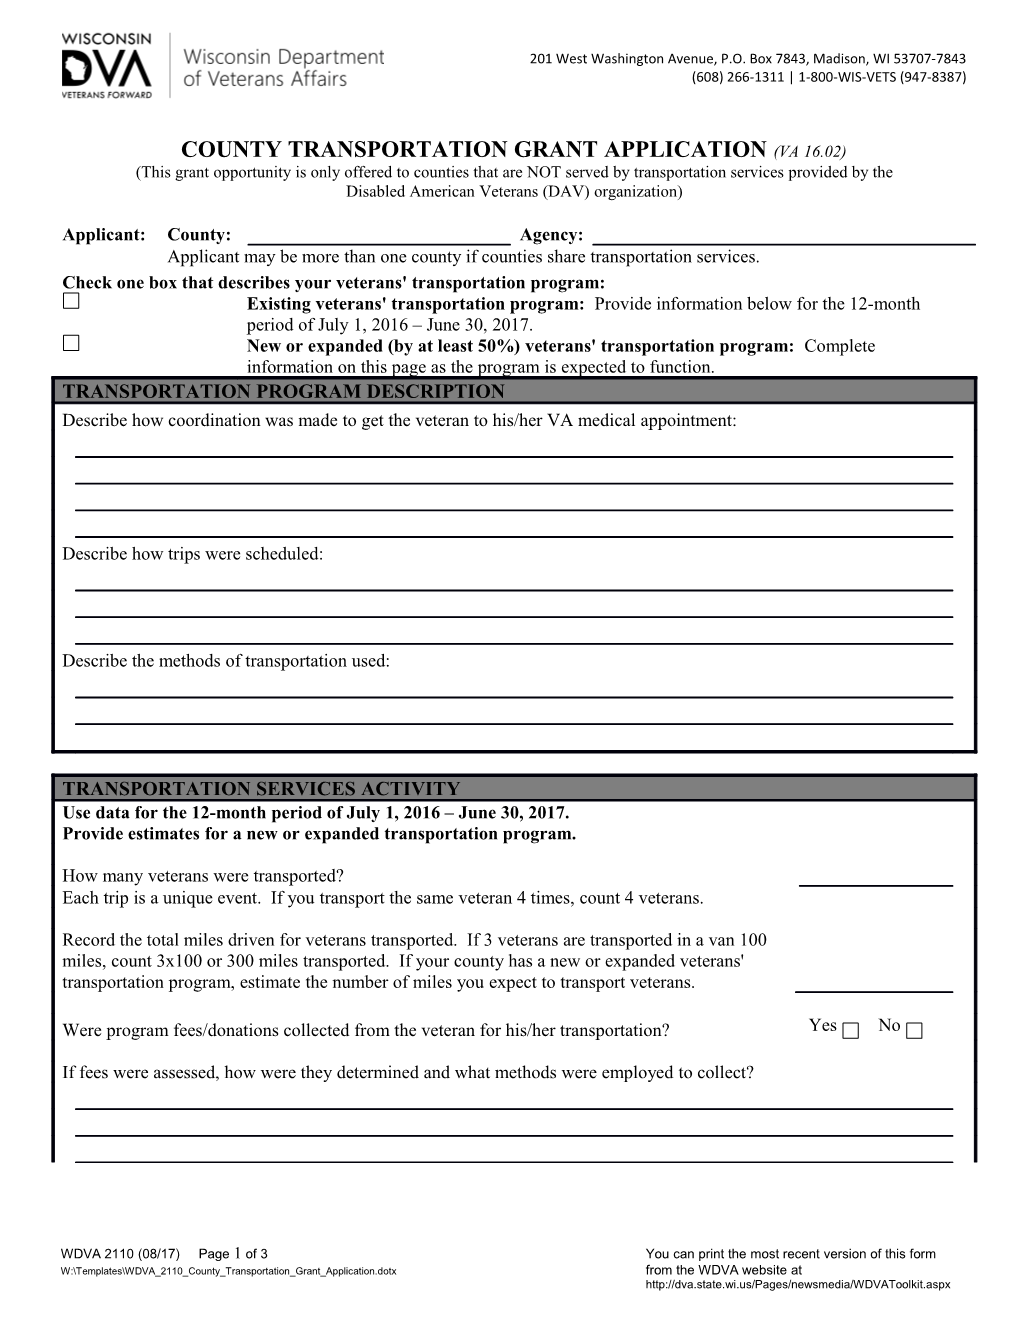 WDVA 2110 County Transportation Grant Application